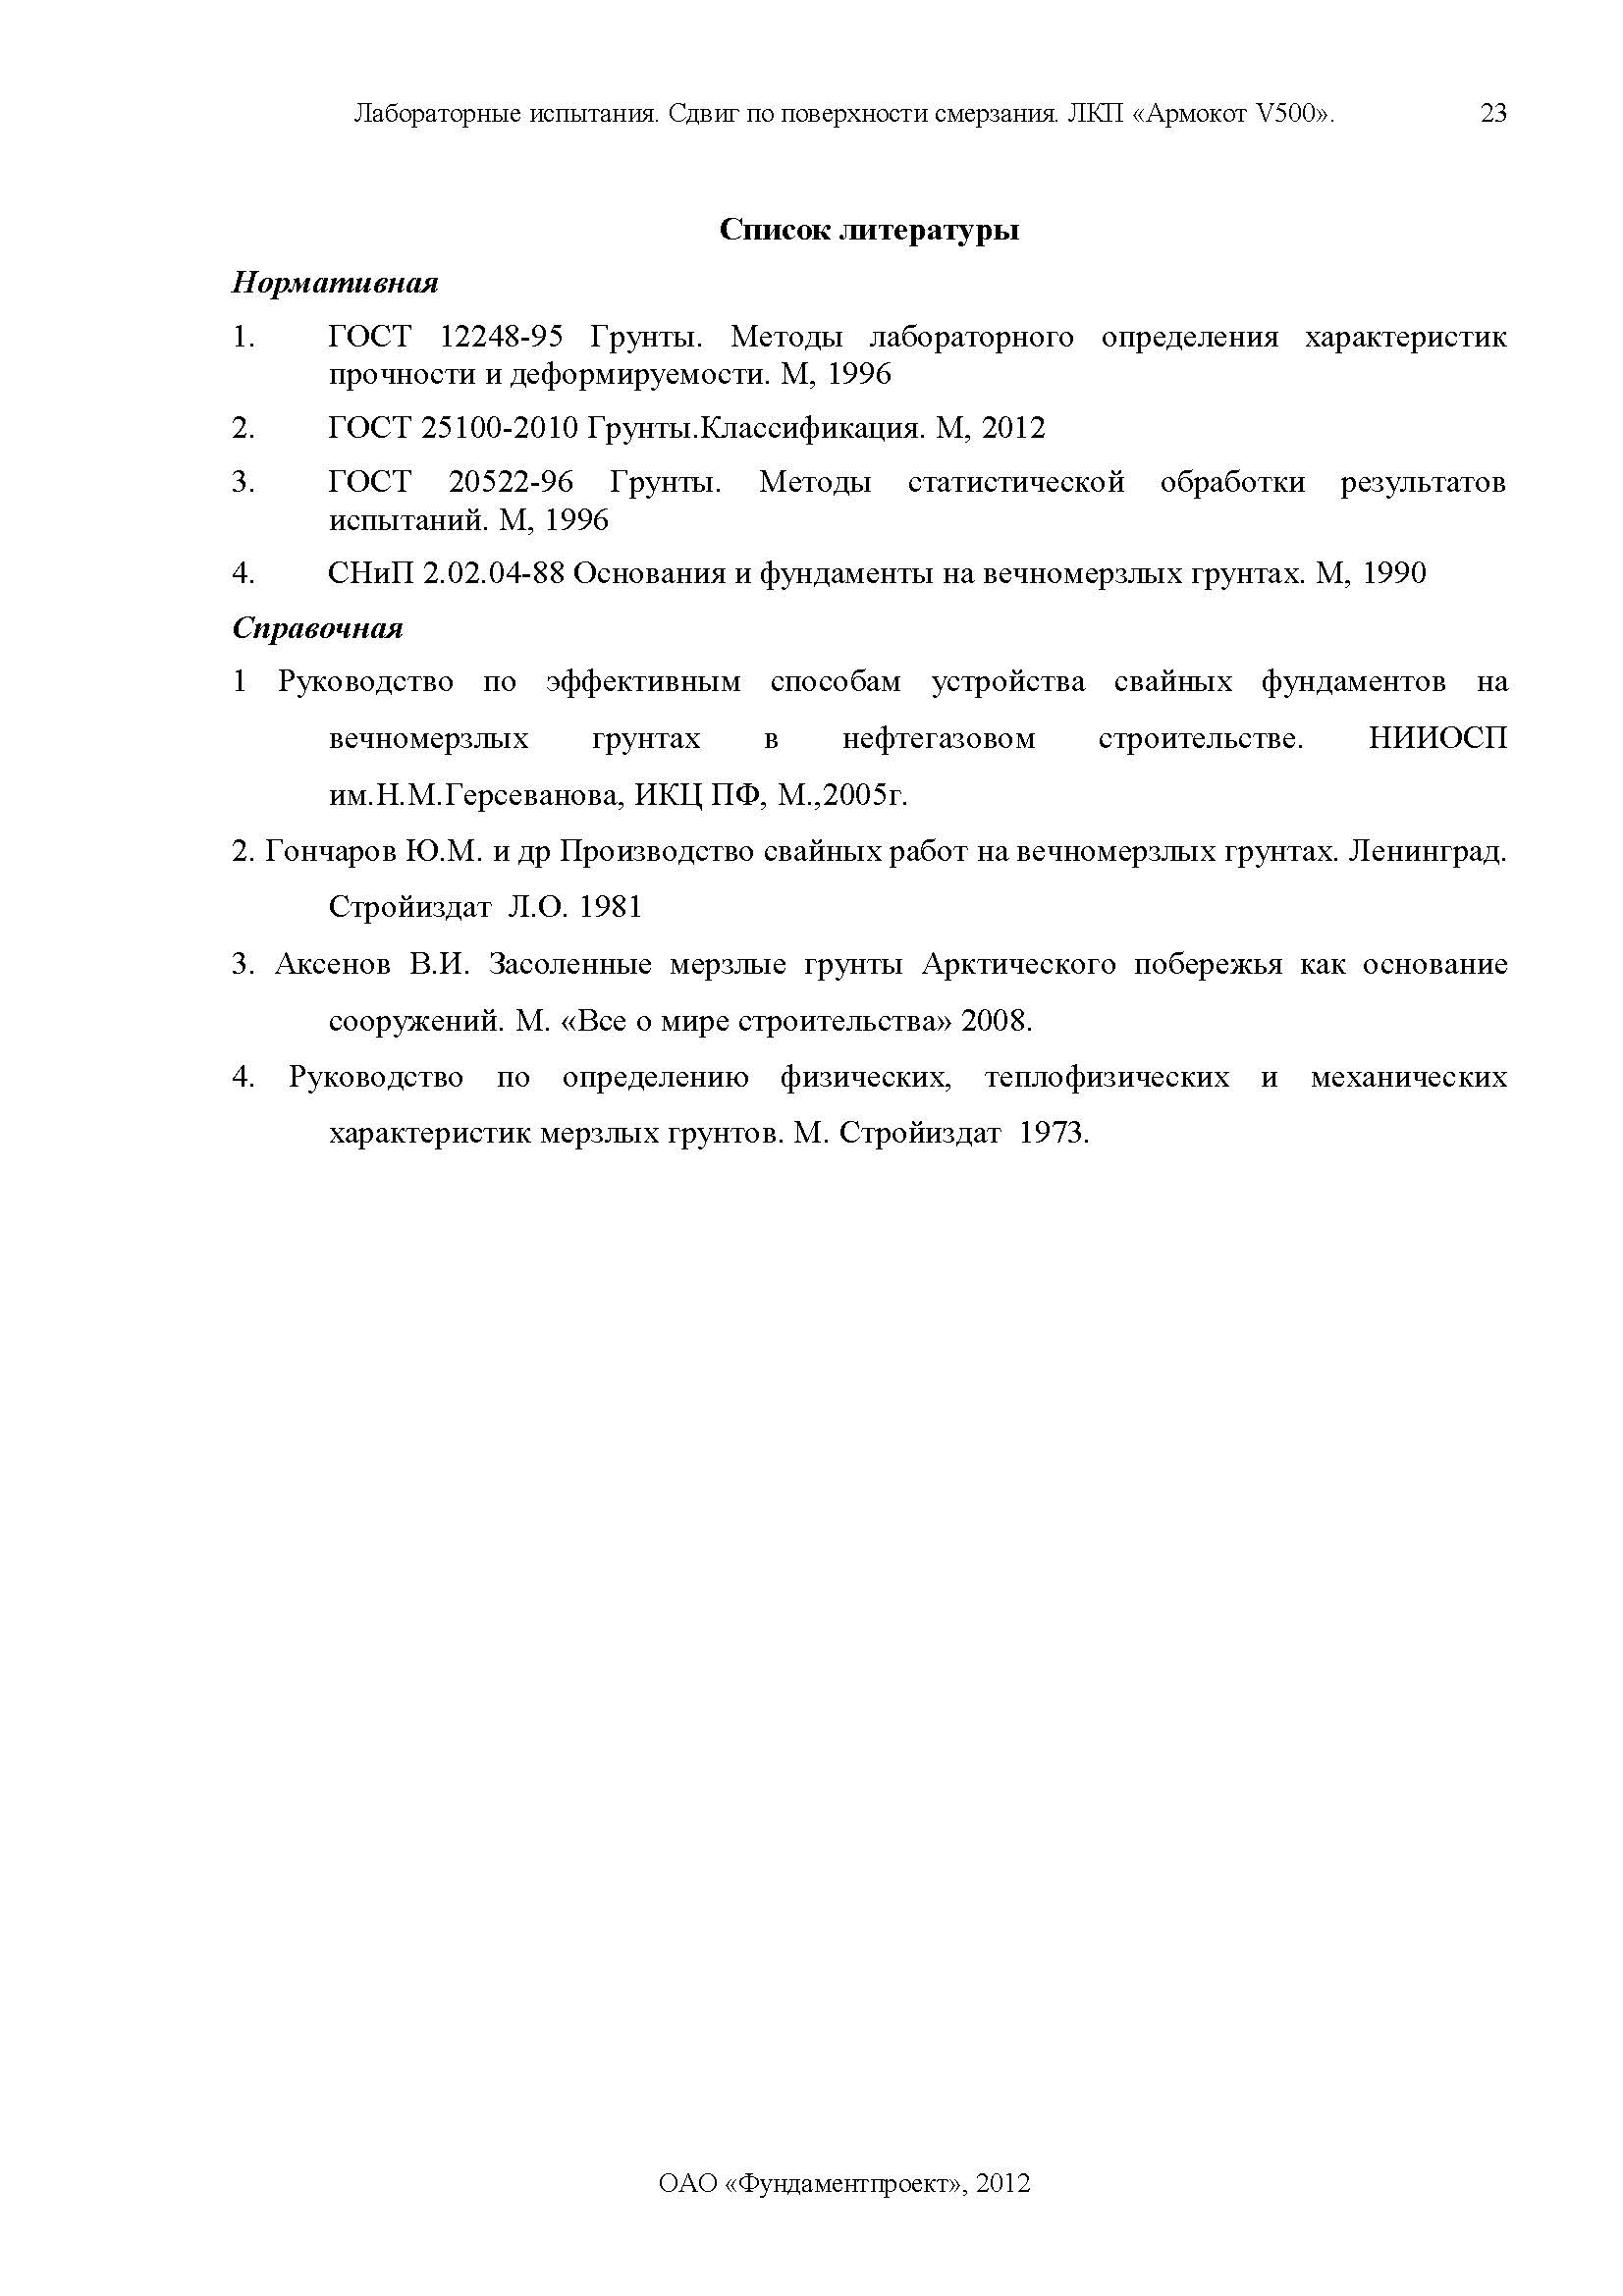 Отчет по сваям Армокот V500 Фундаментпроект_Страница_23